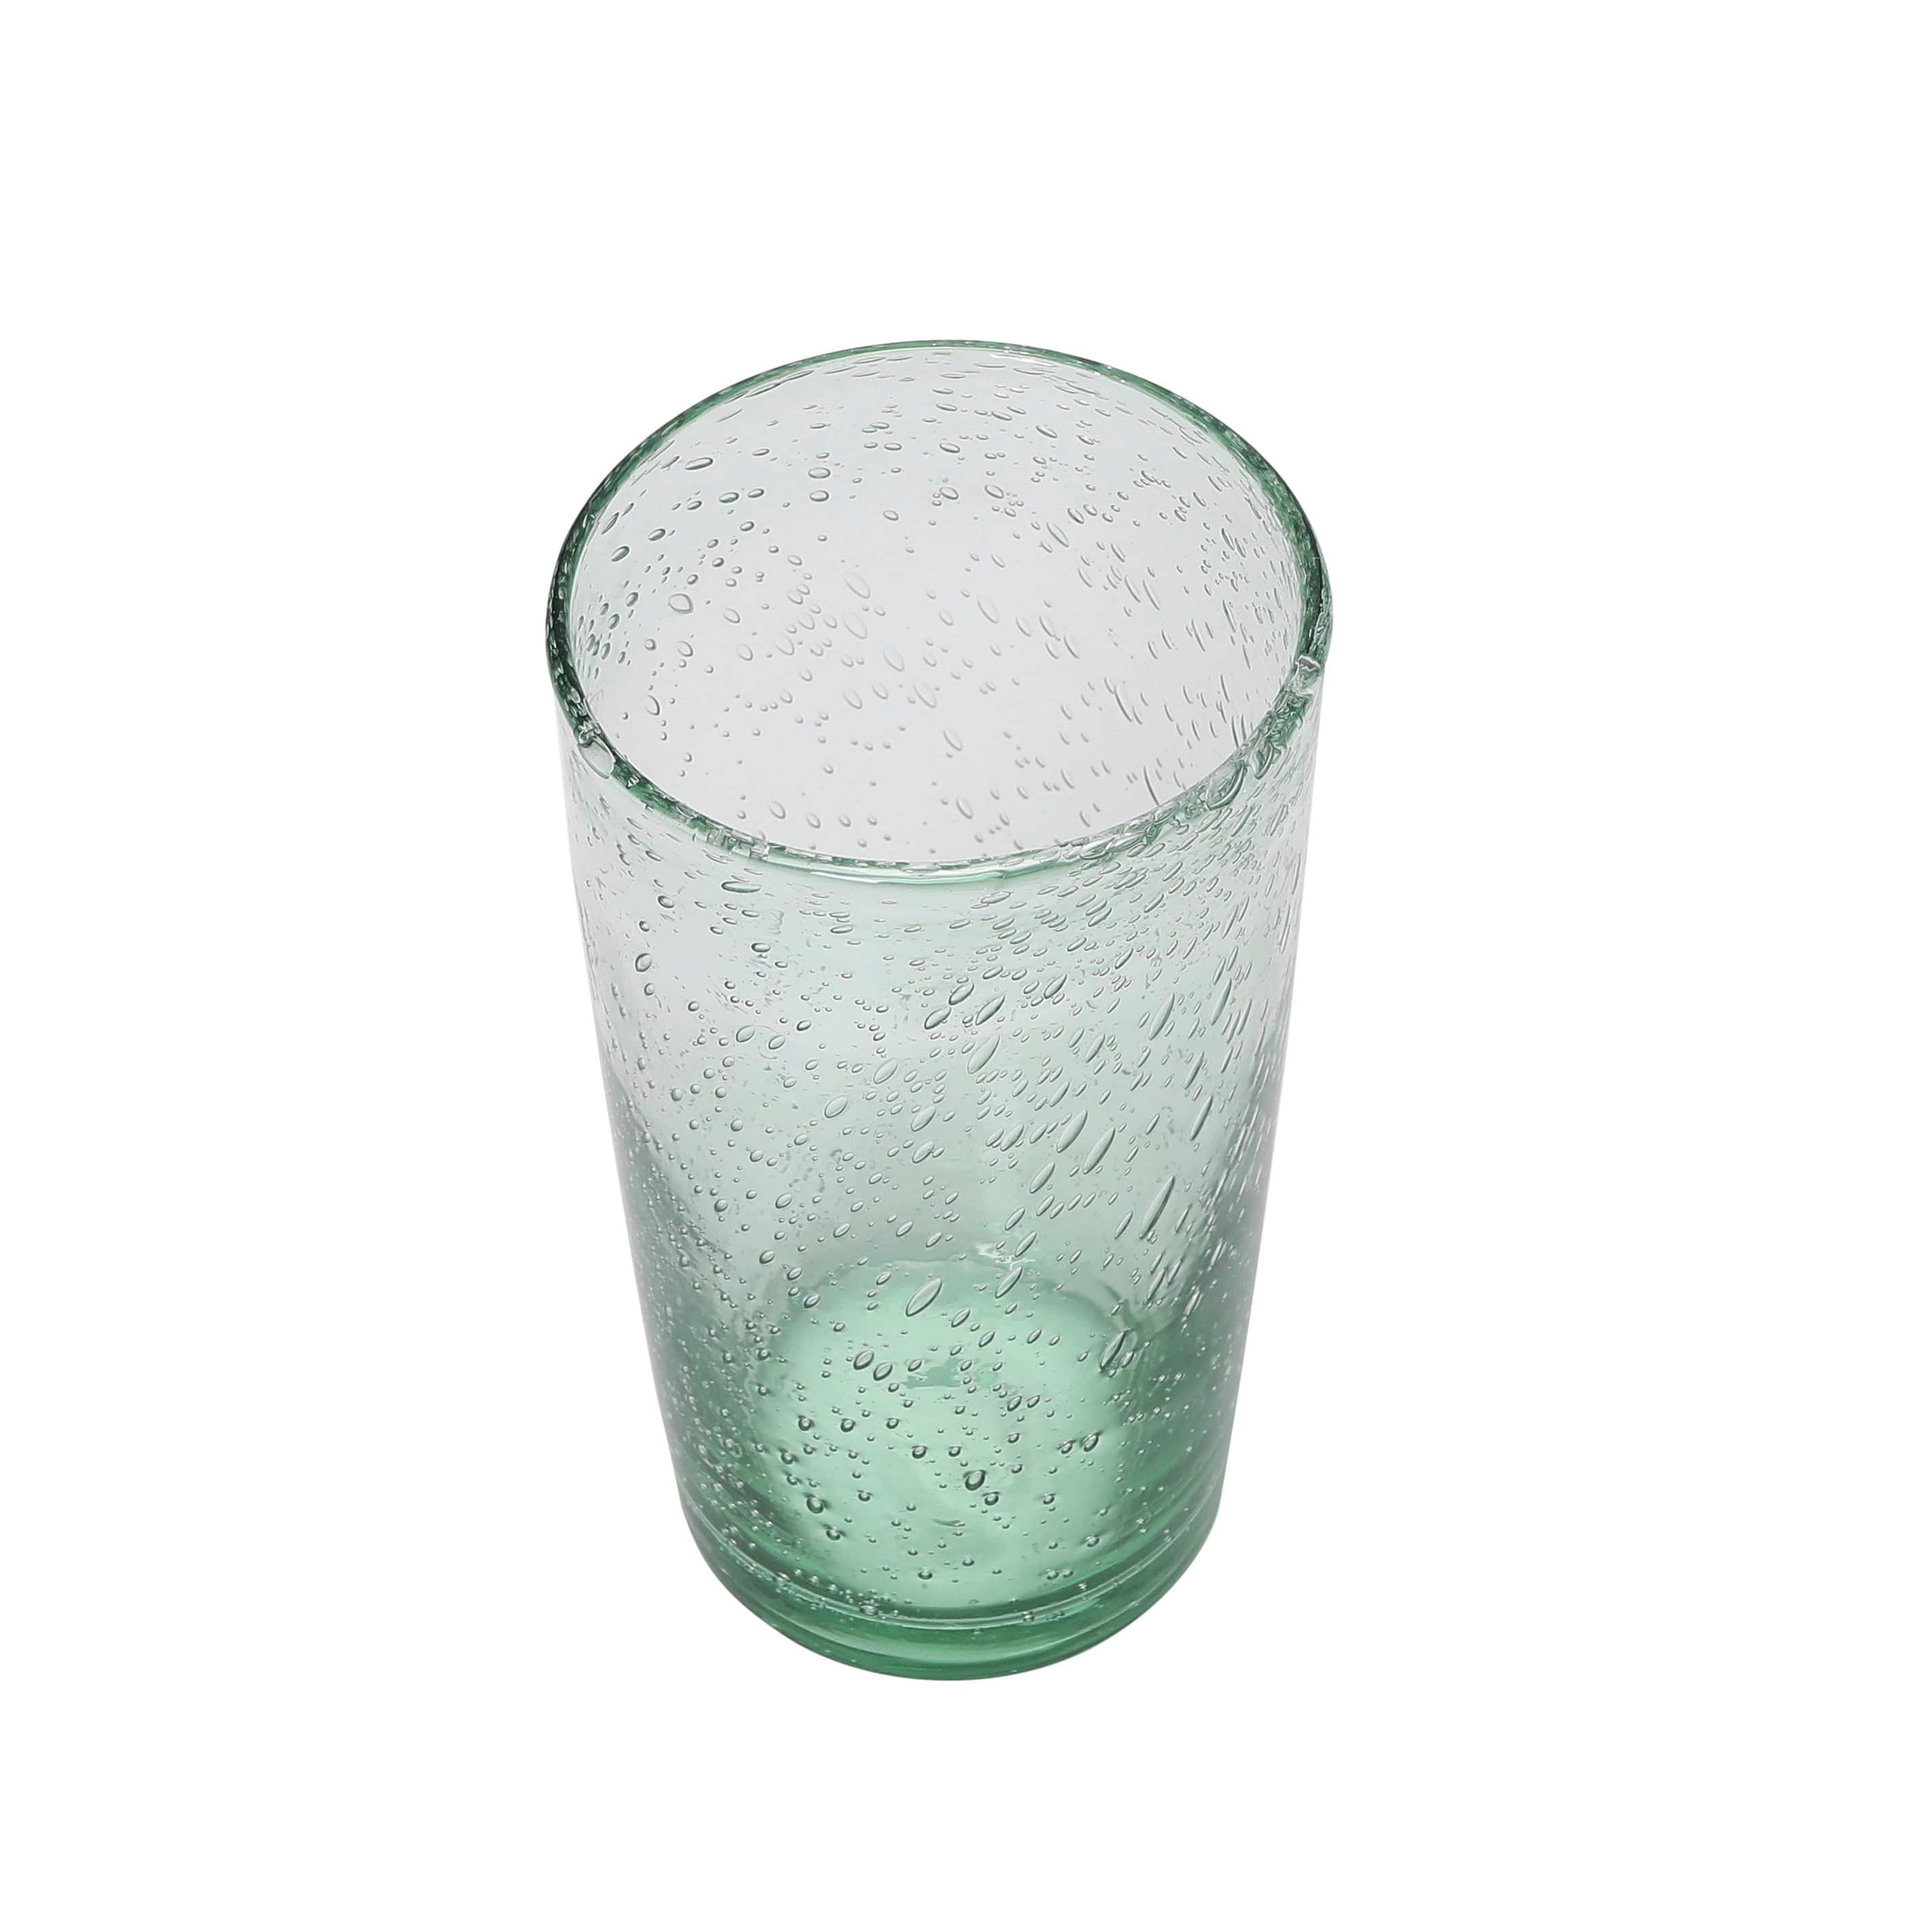 20oz. Transparent Bubble Drinking Glass Set